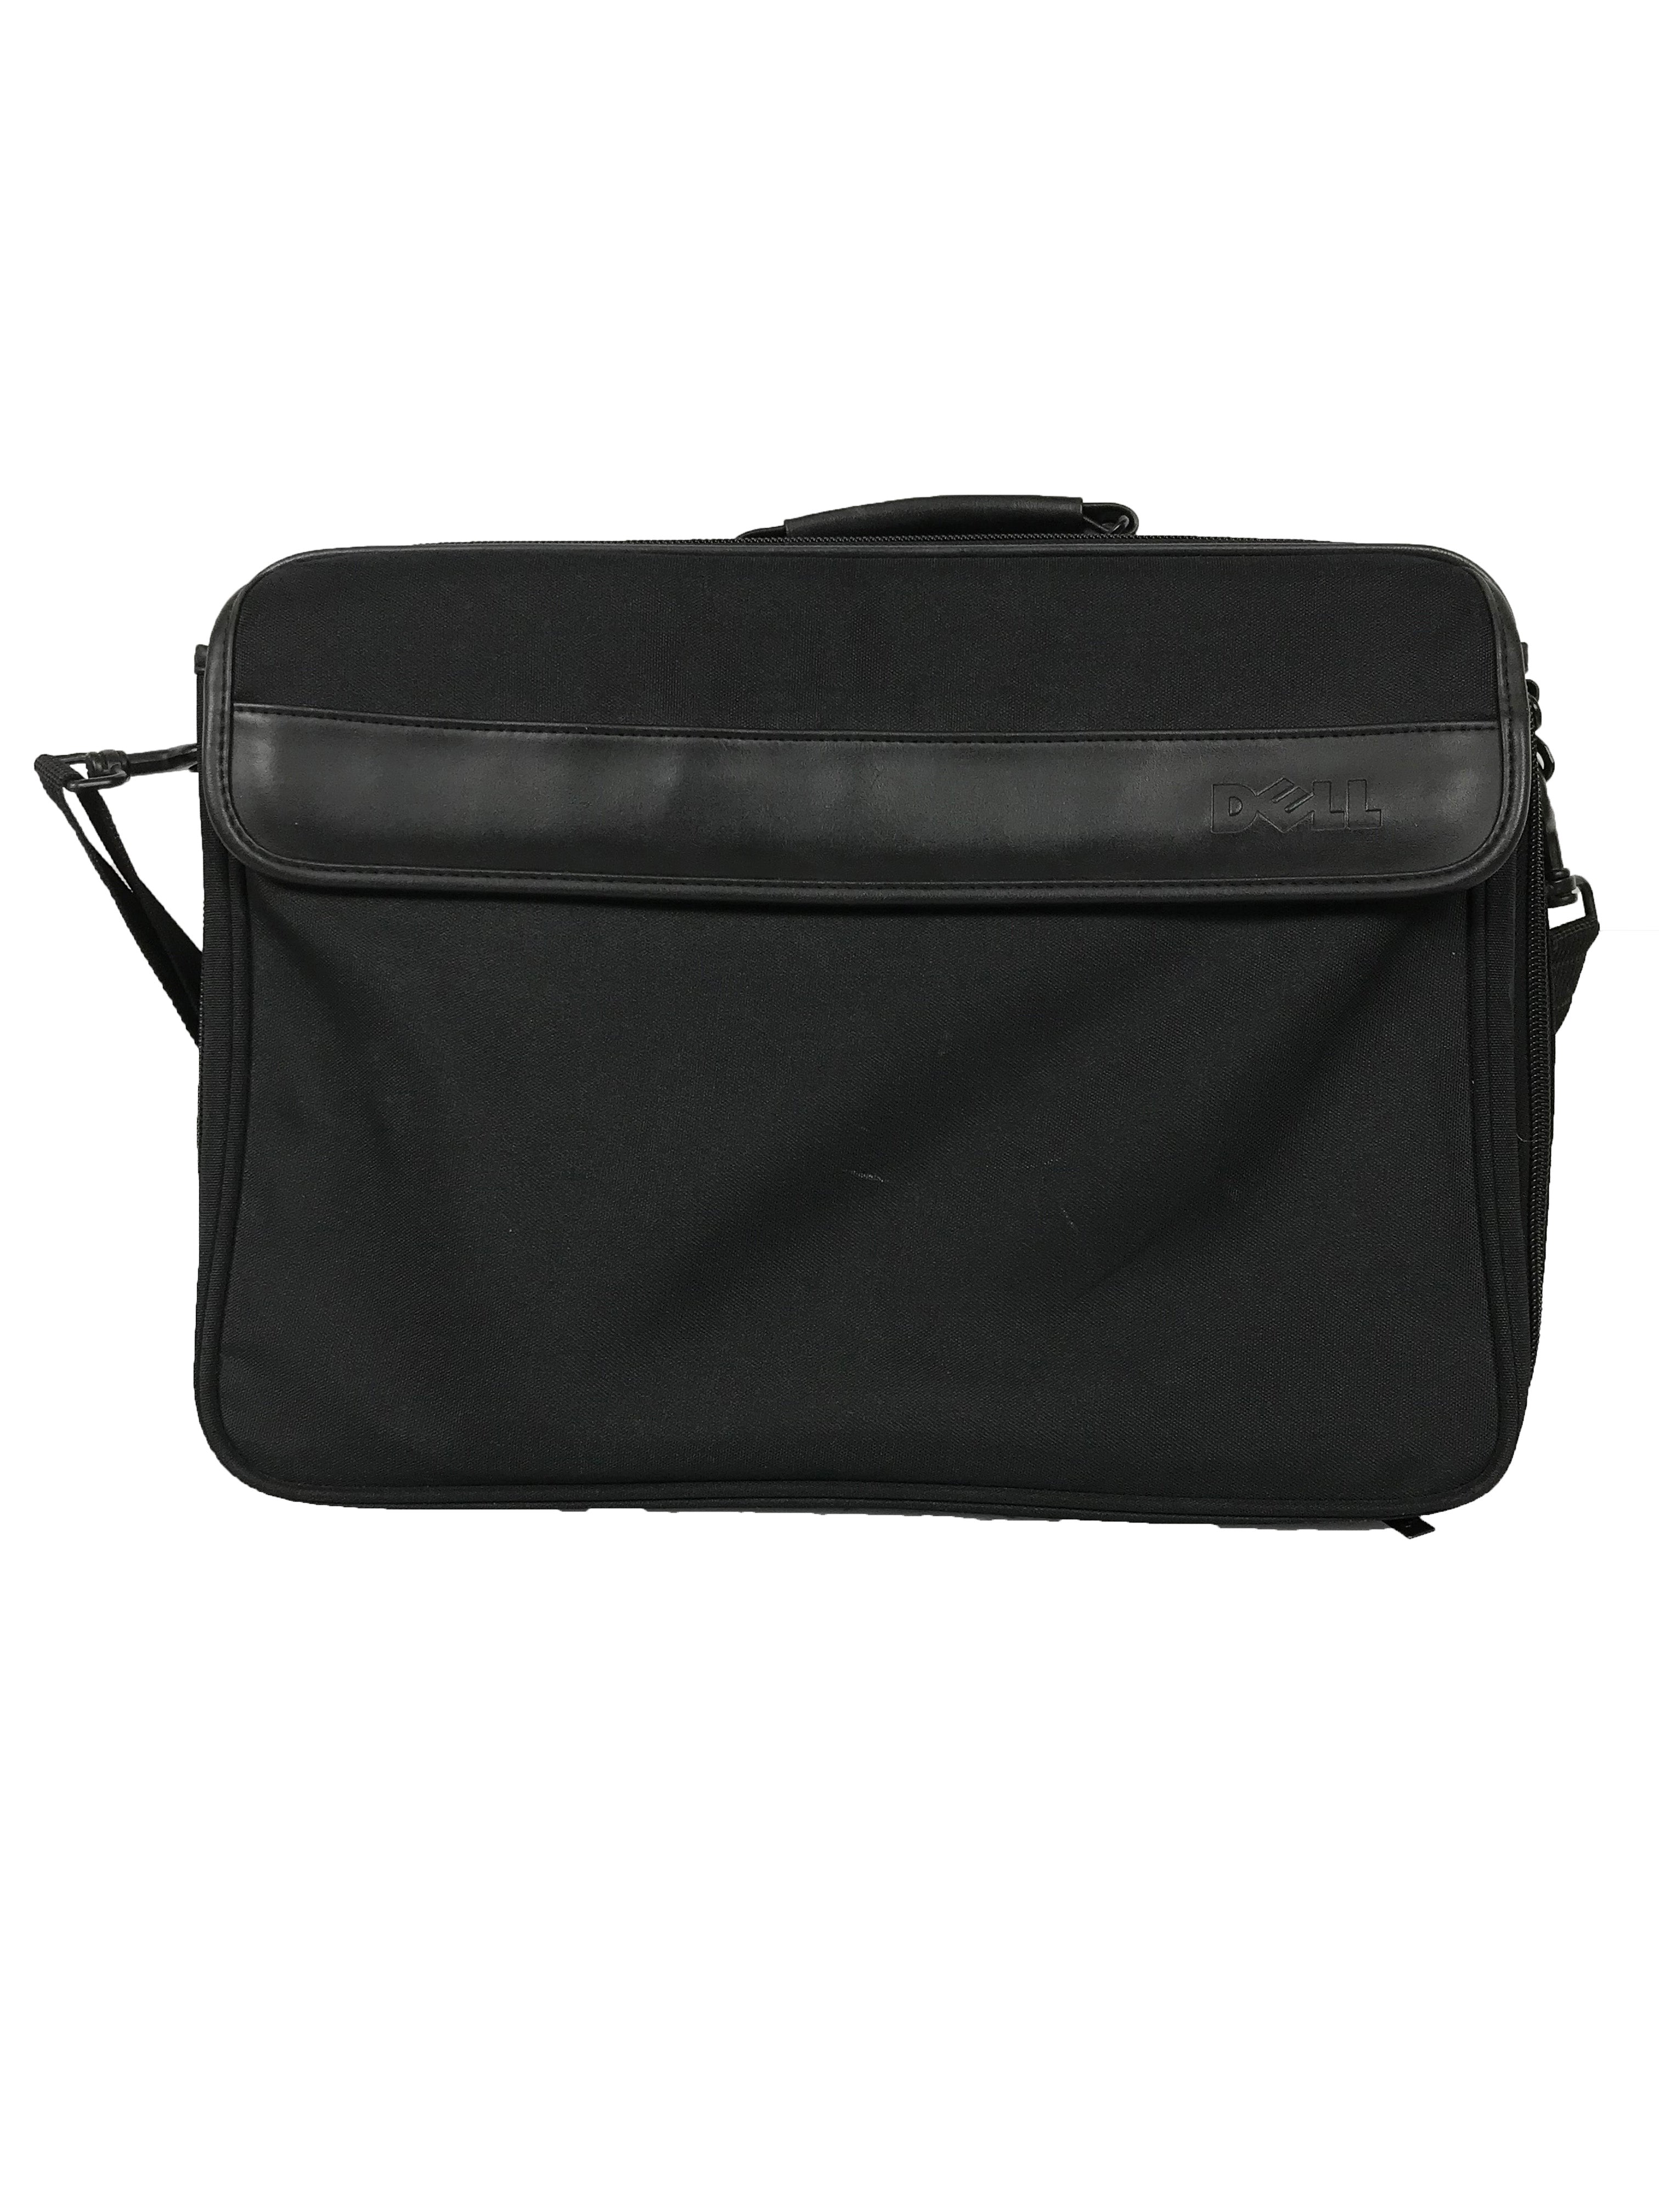 Dell Black Laptop Briefcase Bag